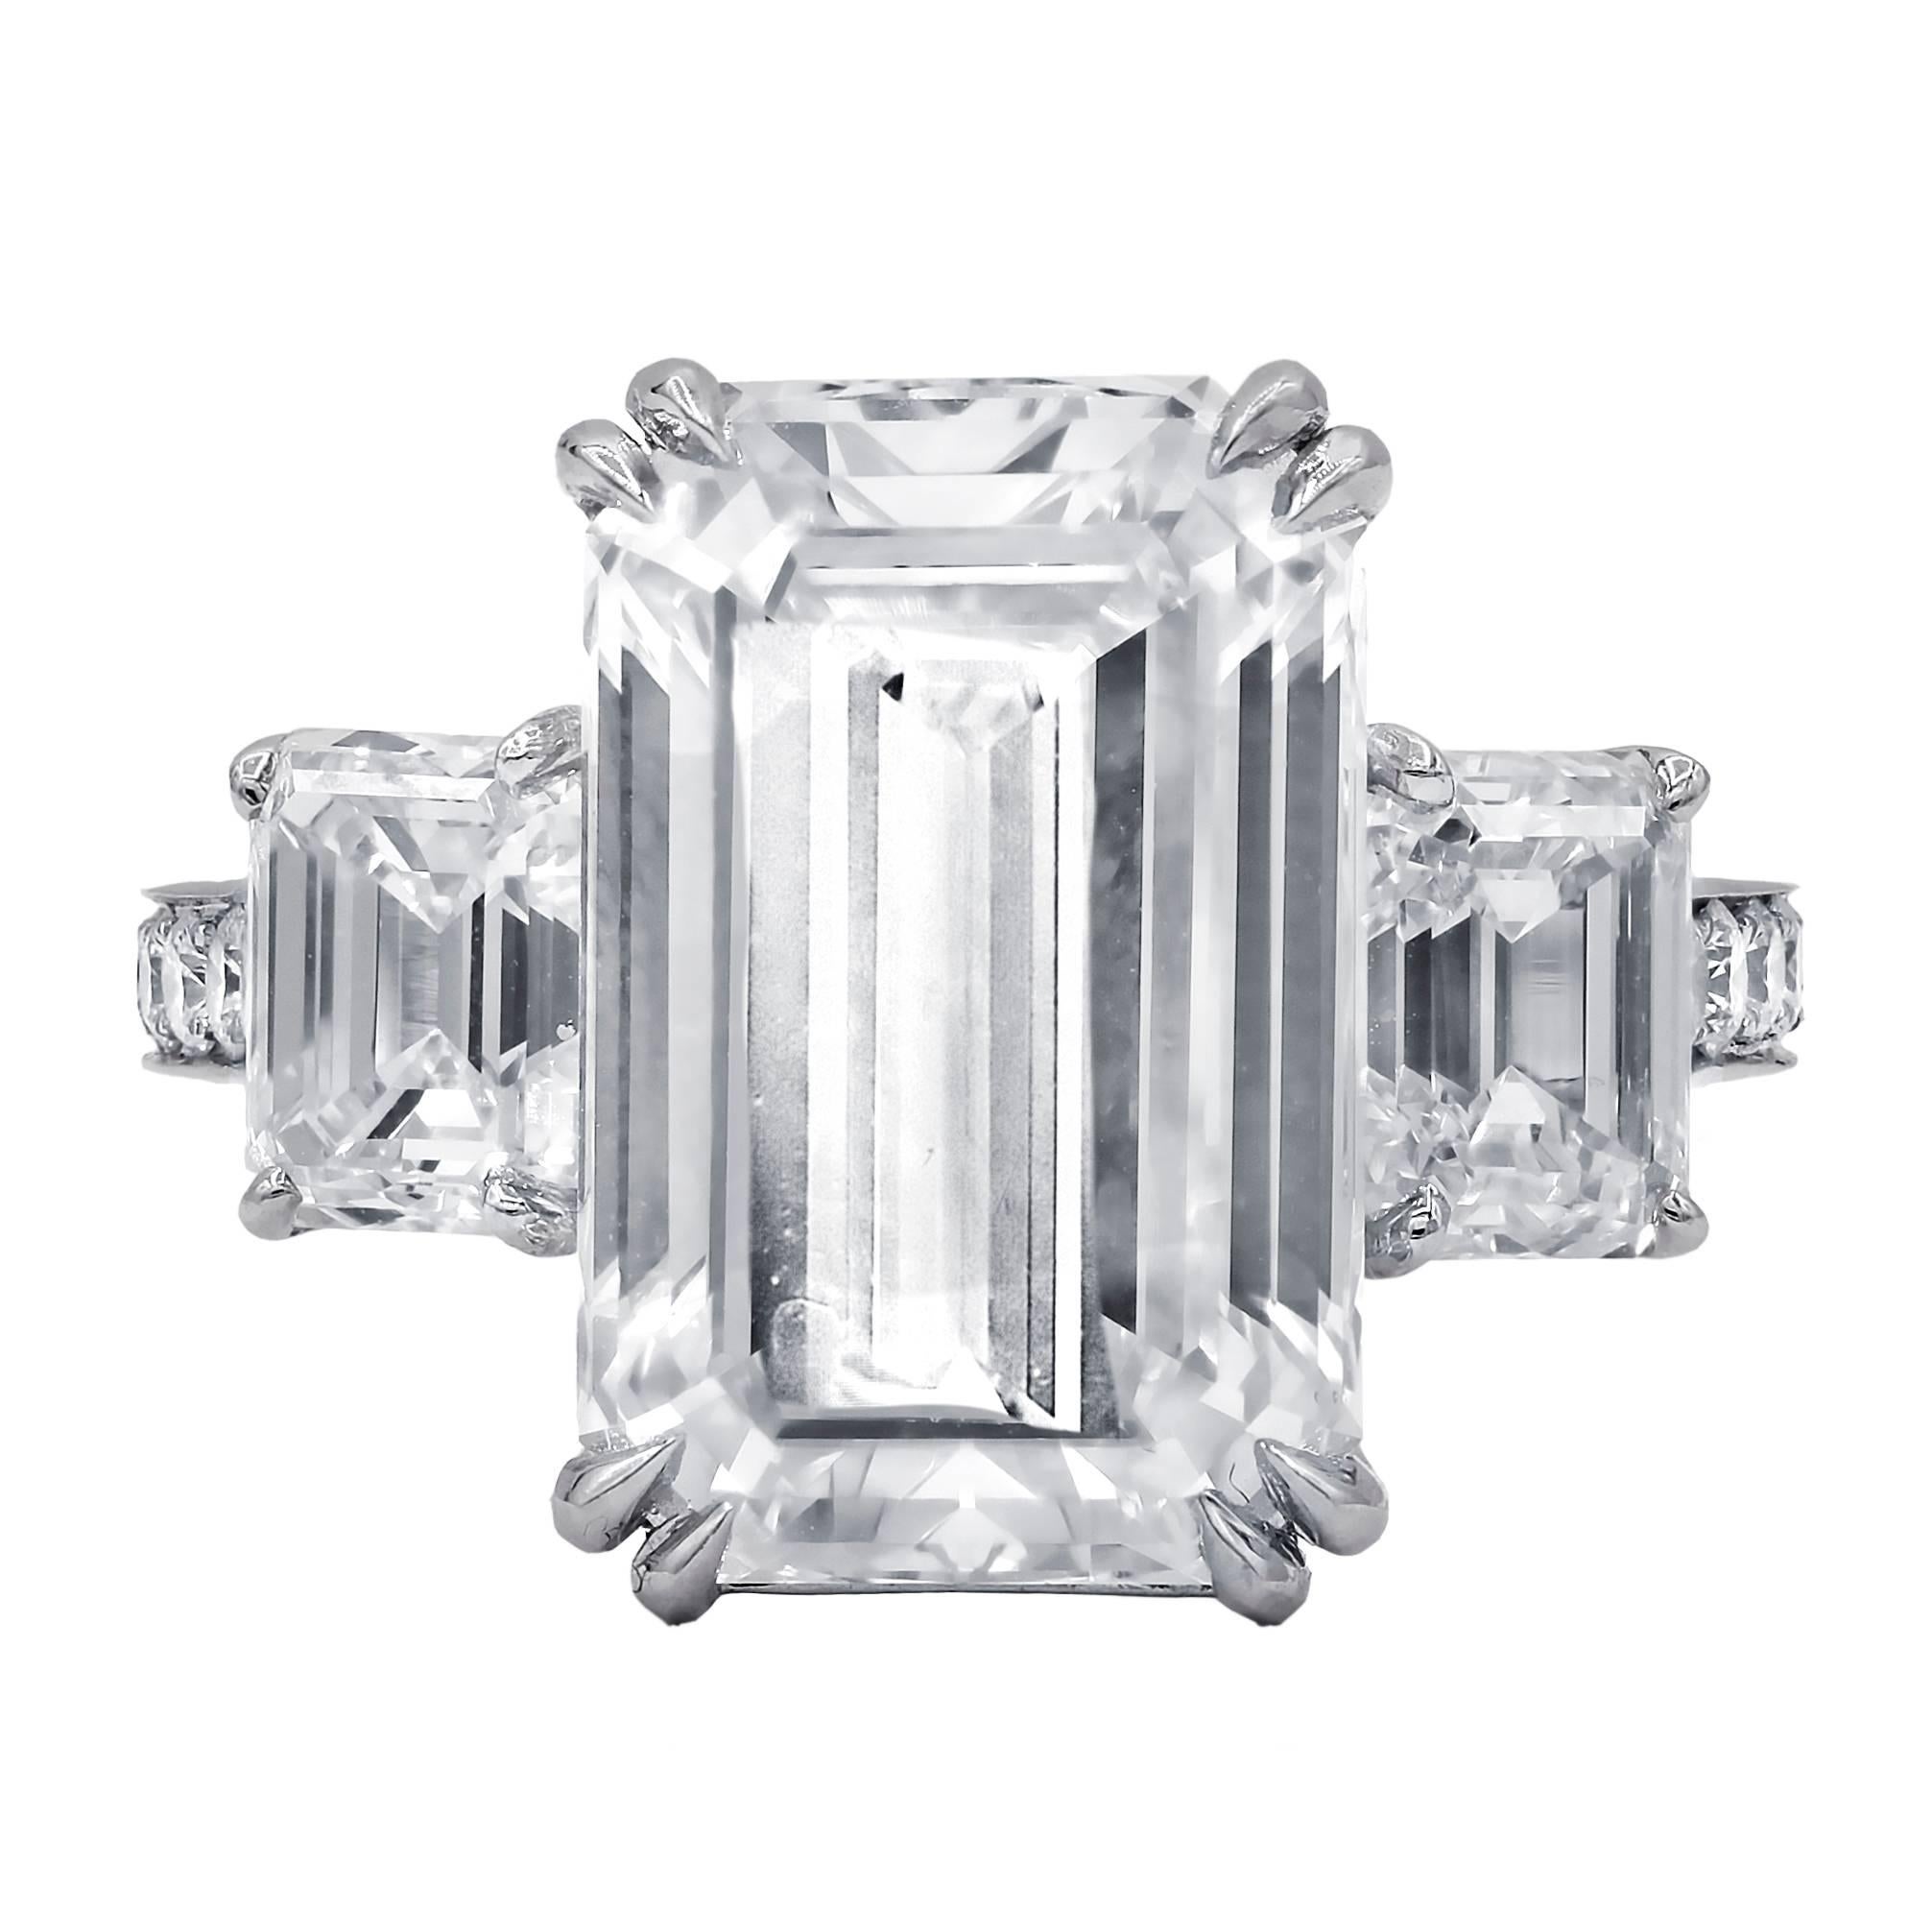 Spectacular GIA 9.38 I-VVS2 Emerald Cut Diamond Ring For Sale